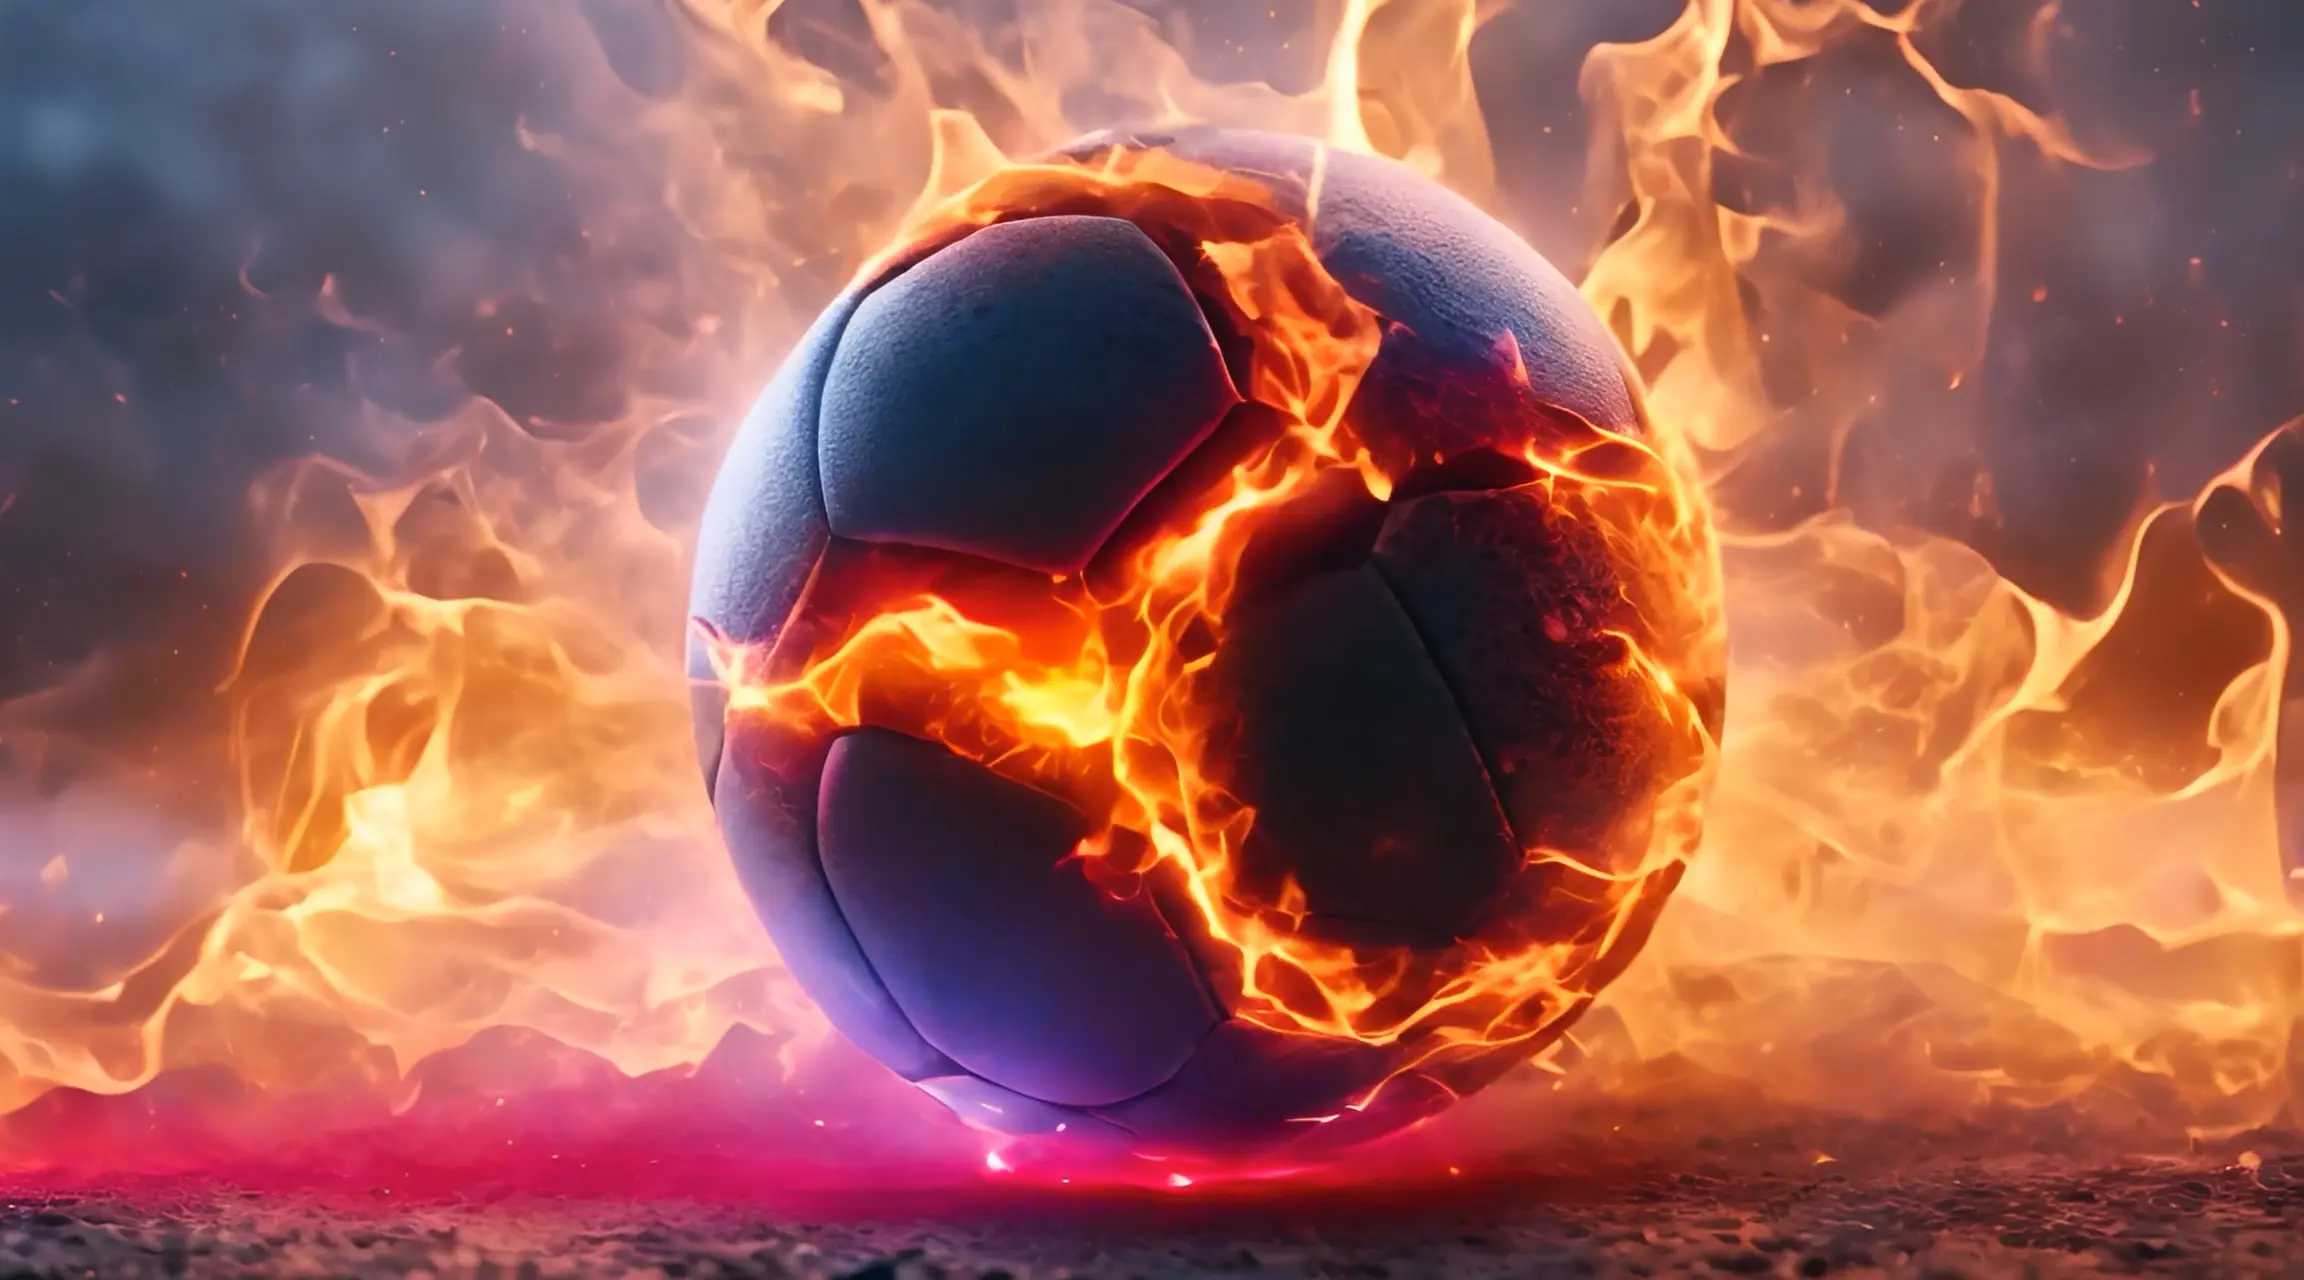 Blazing Goal Flaming Soccer Ball Backdrop